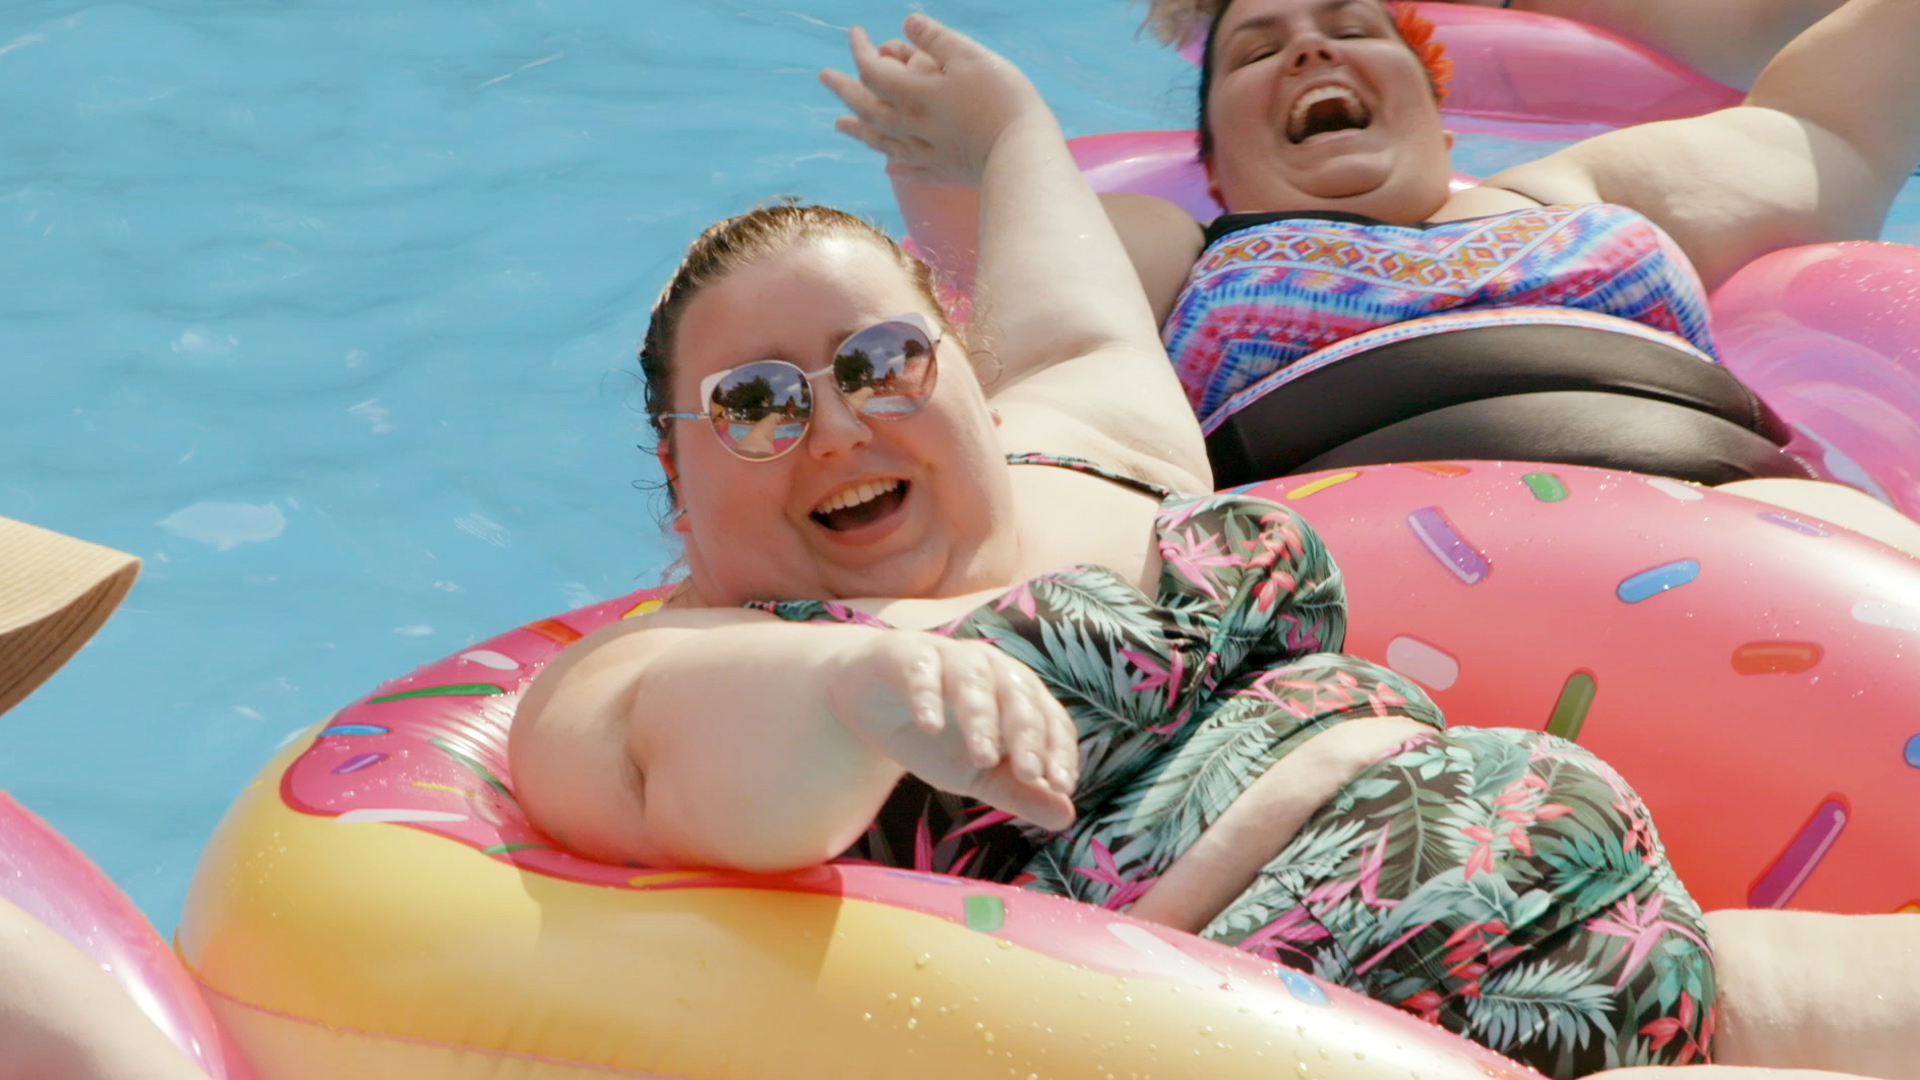 Fat Girl Pool Sex - The Fat Camp Celebrating Body Positivity